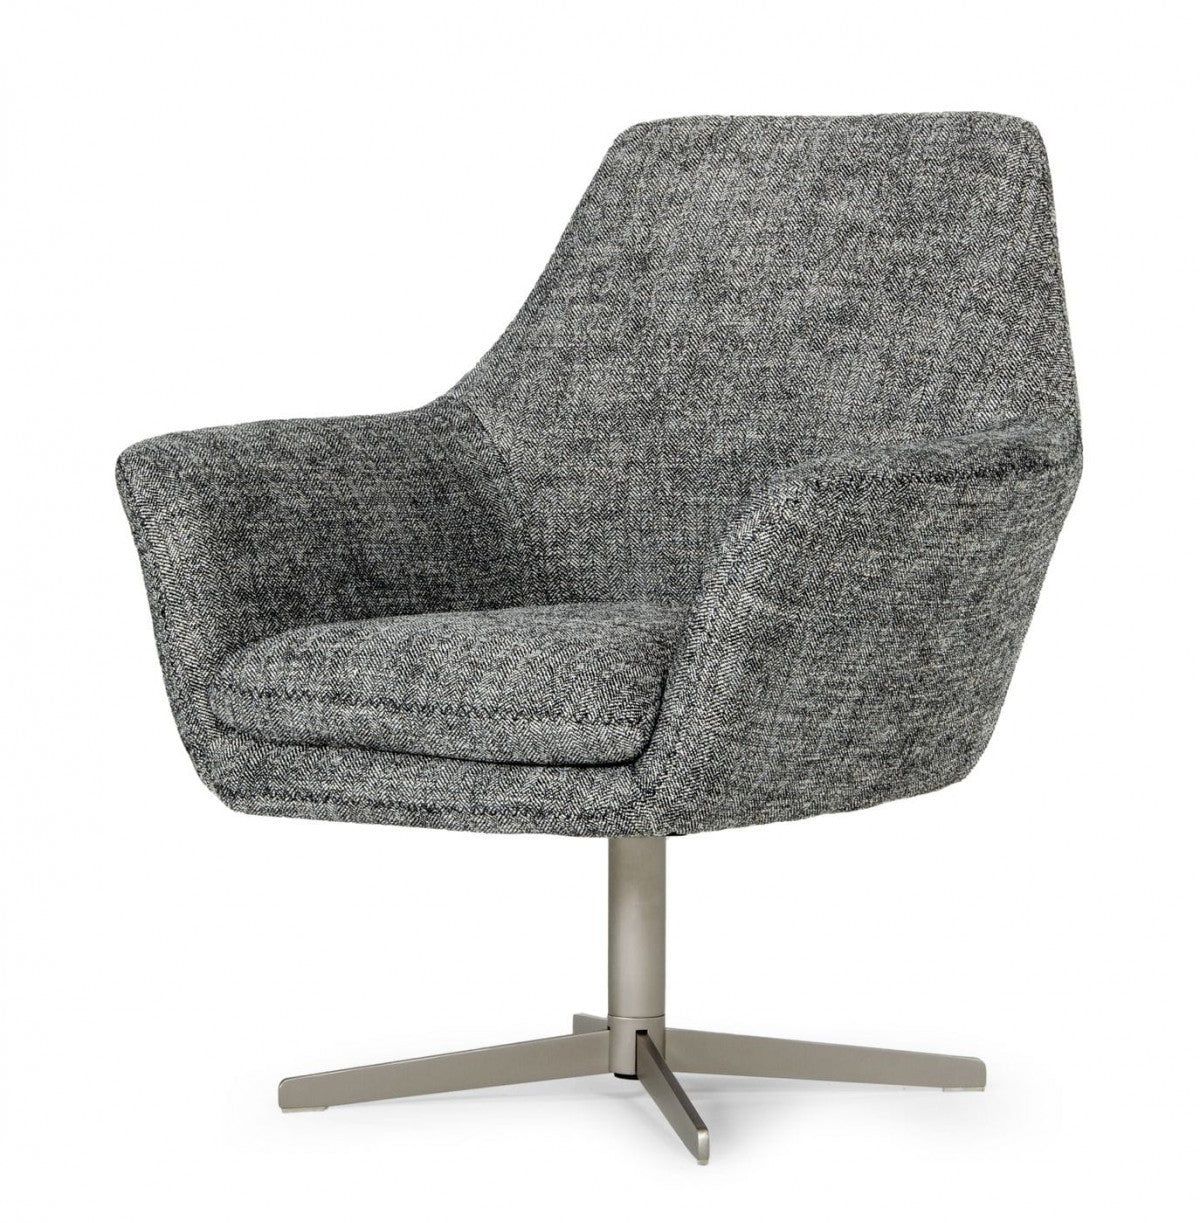 Trendy And Eye-Catchy Dark Grey Swivel Chairs